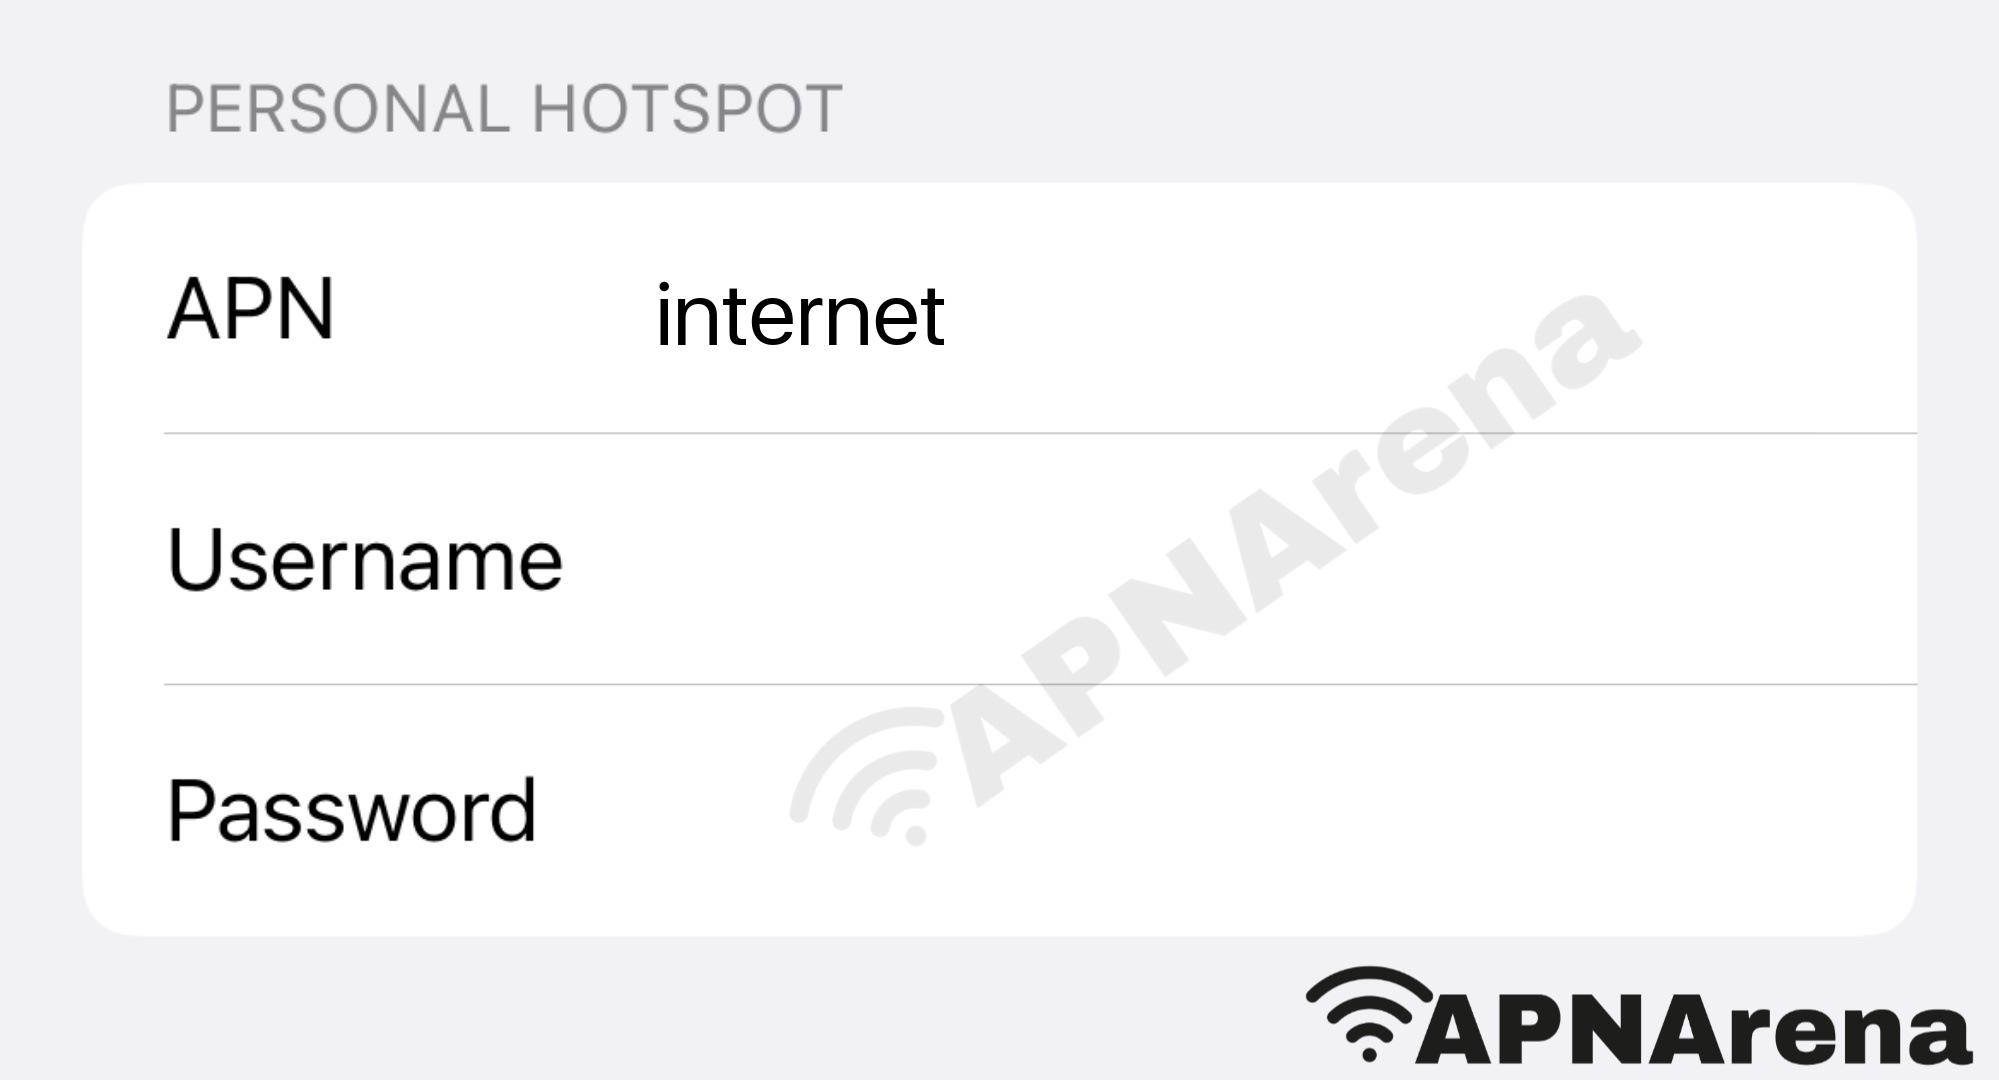 Swisscom Personal Hotspot Settings for iPhone